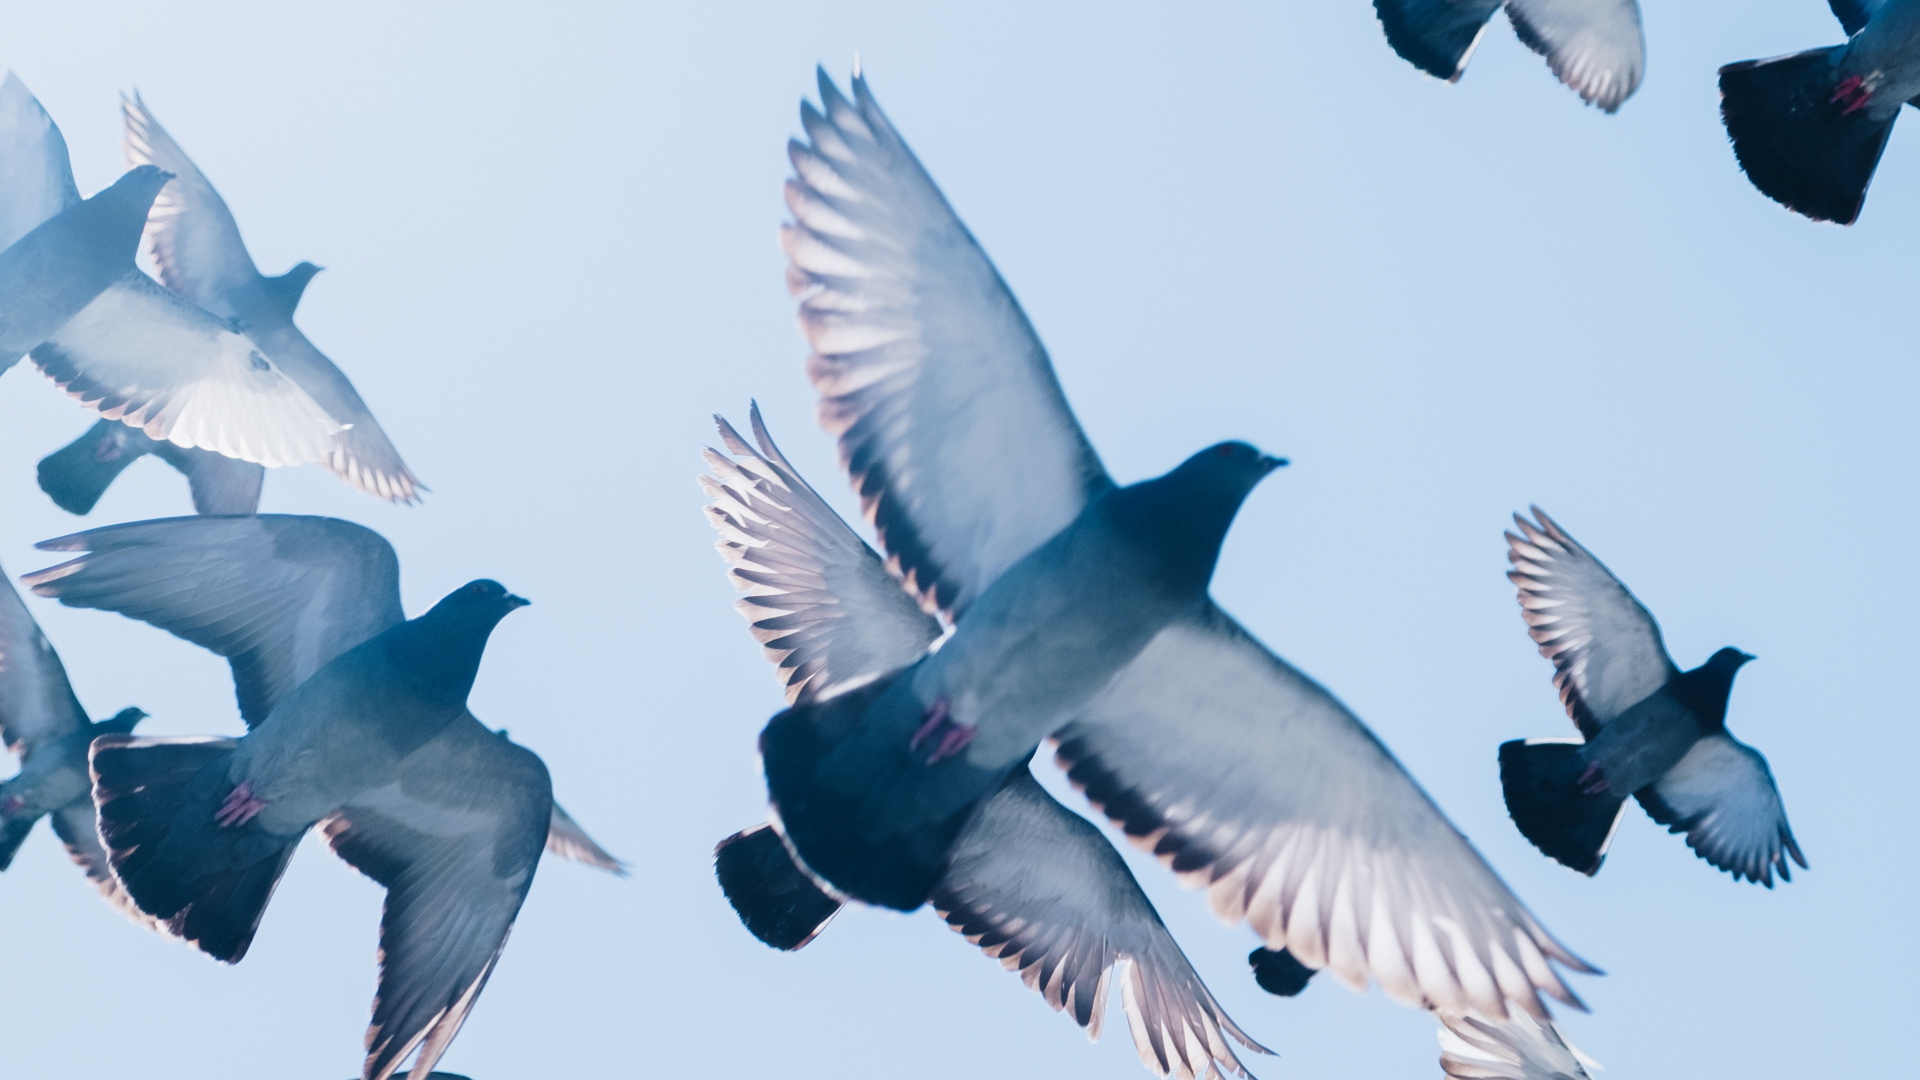 Flock of Birds Flying Under Blue Sky During Daytime. Wallpaper in 1920x1080 Resolution